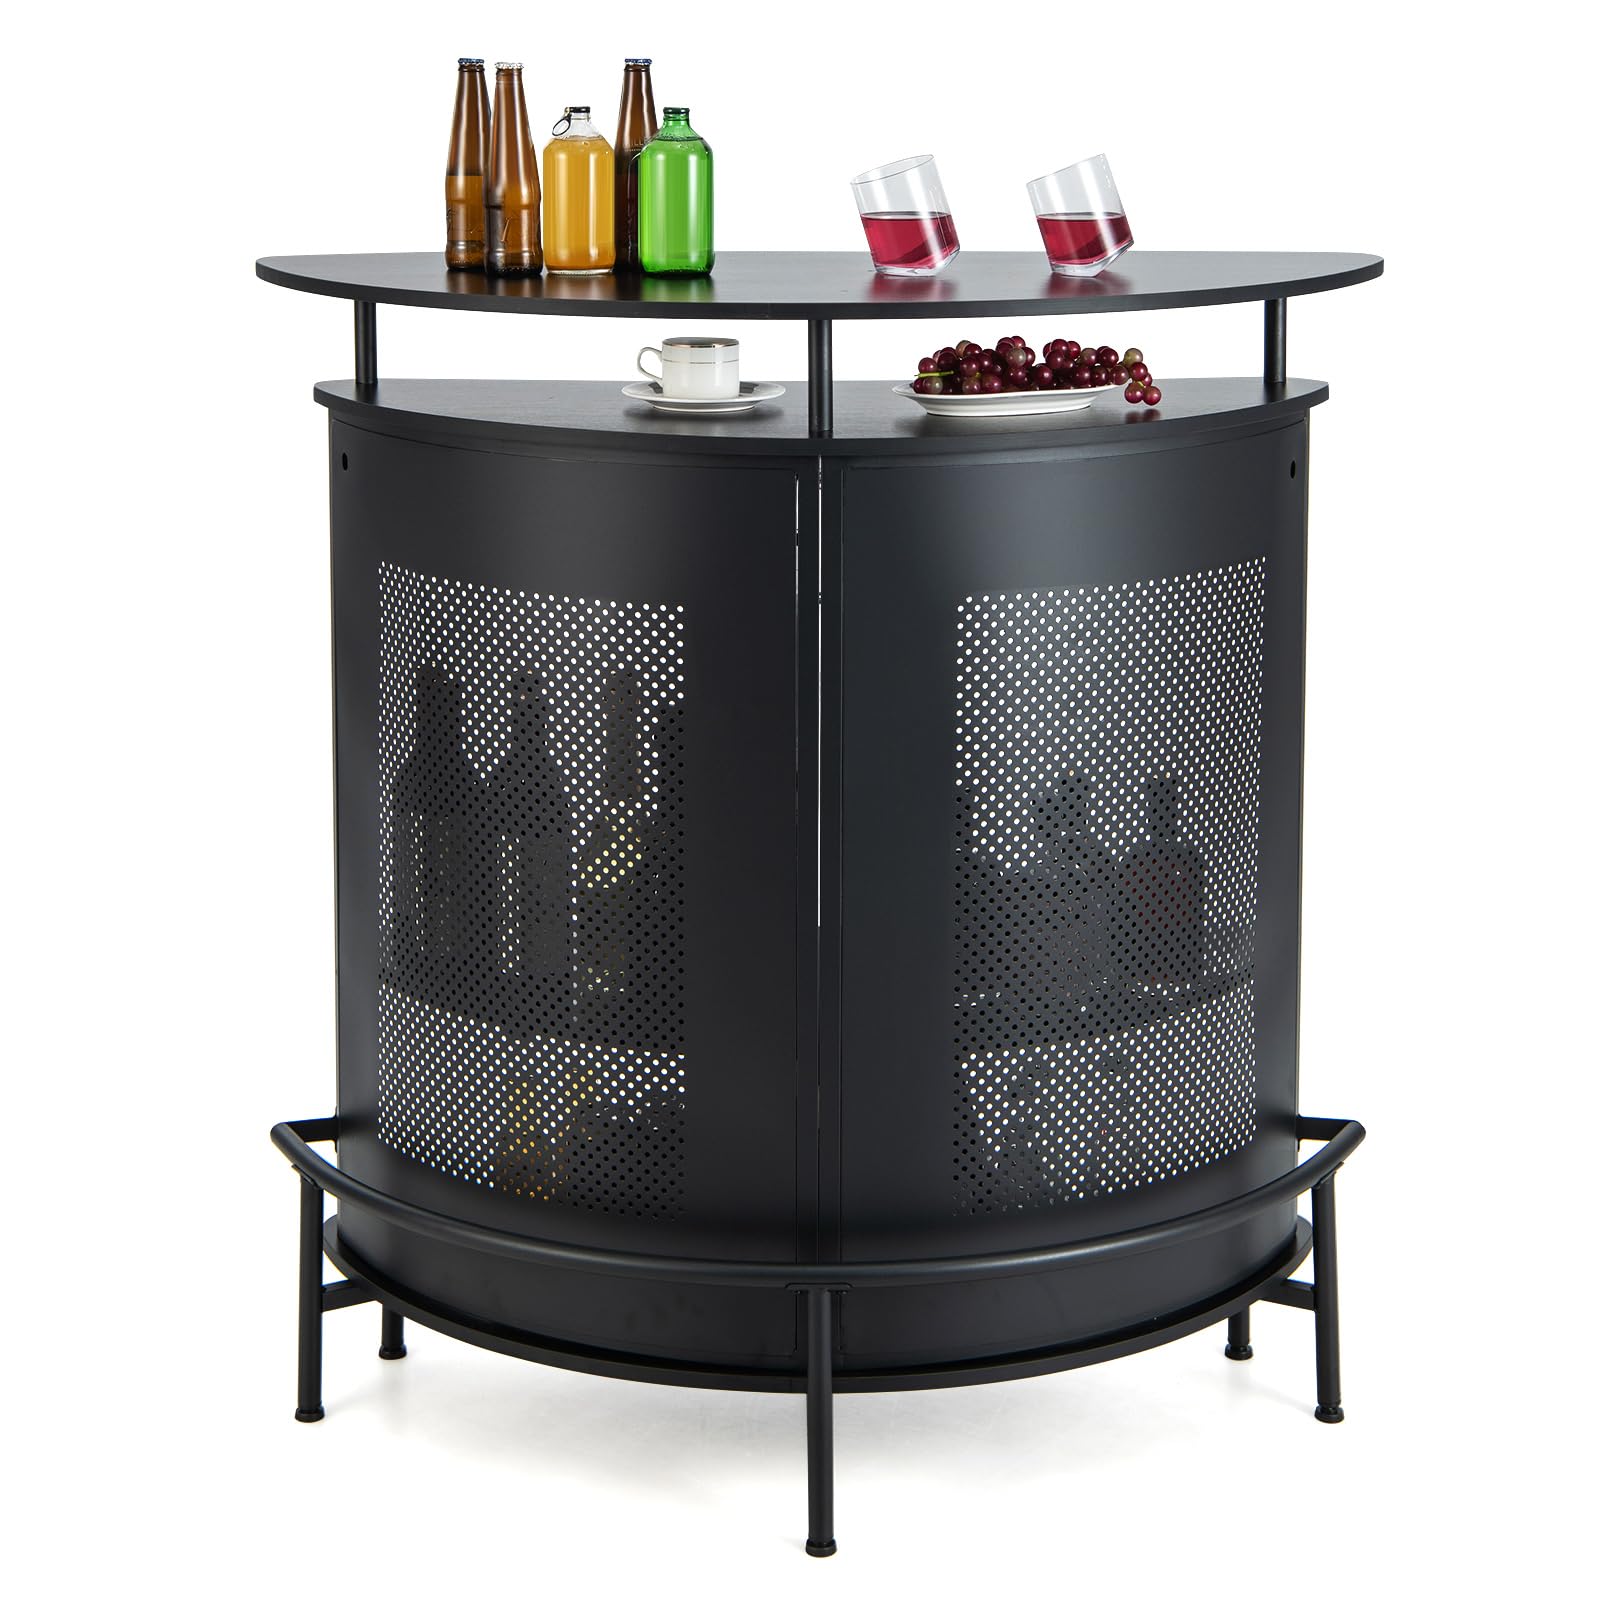 Giantex 4-Tier Home Bar Unit - Bar Cabinet with Storage Shelves, 3 Stemware Holders, Black